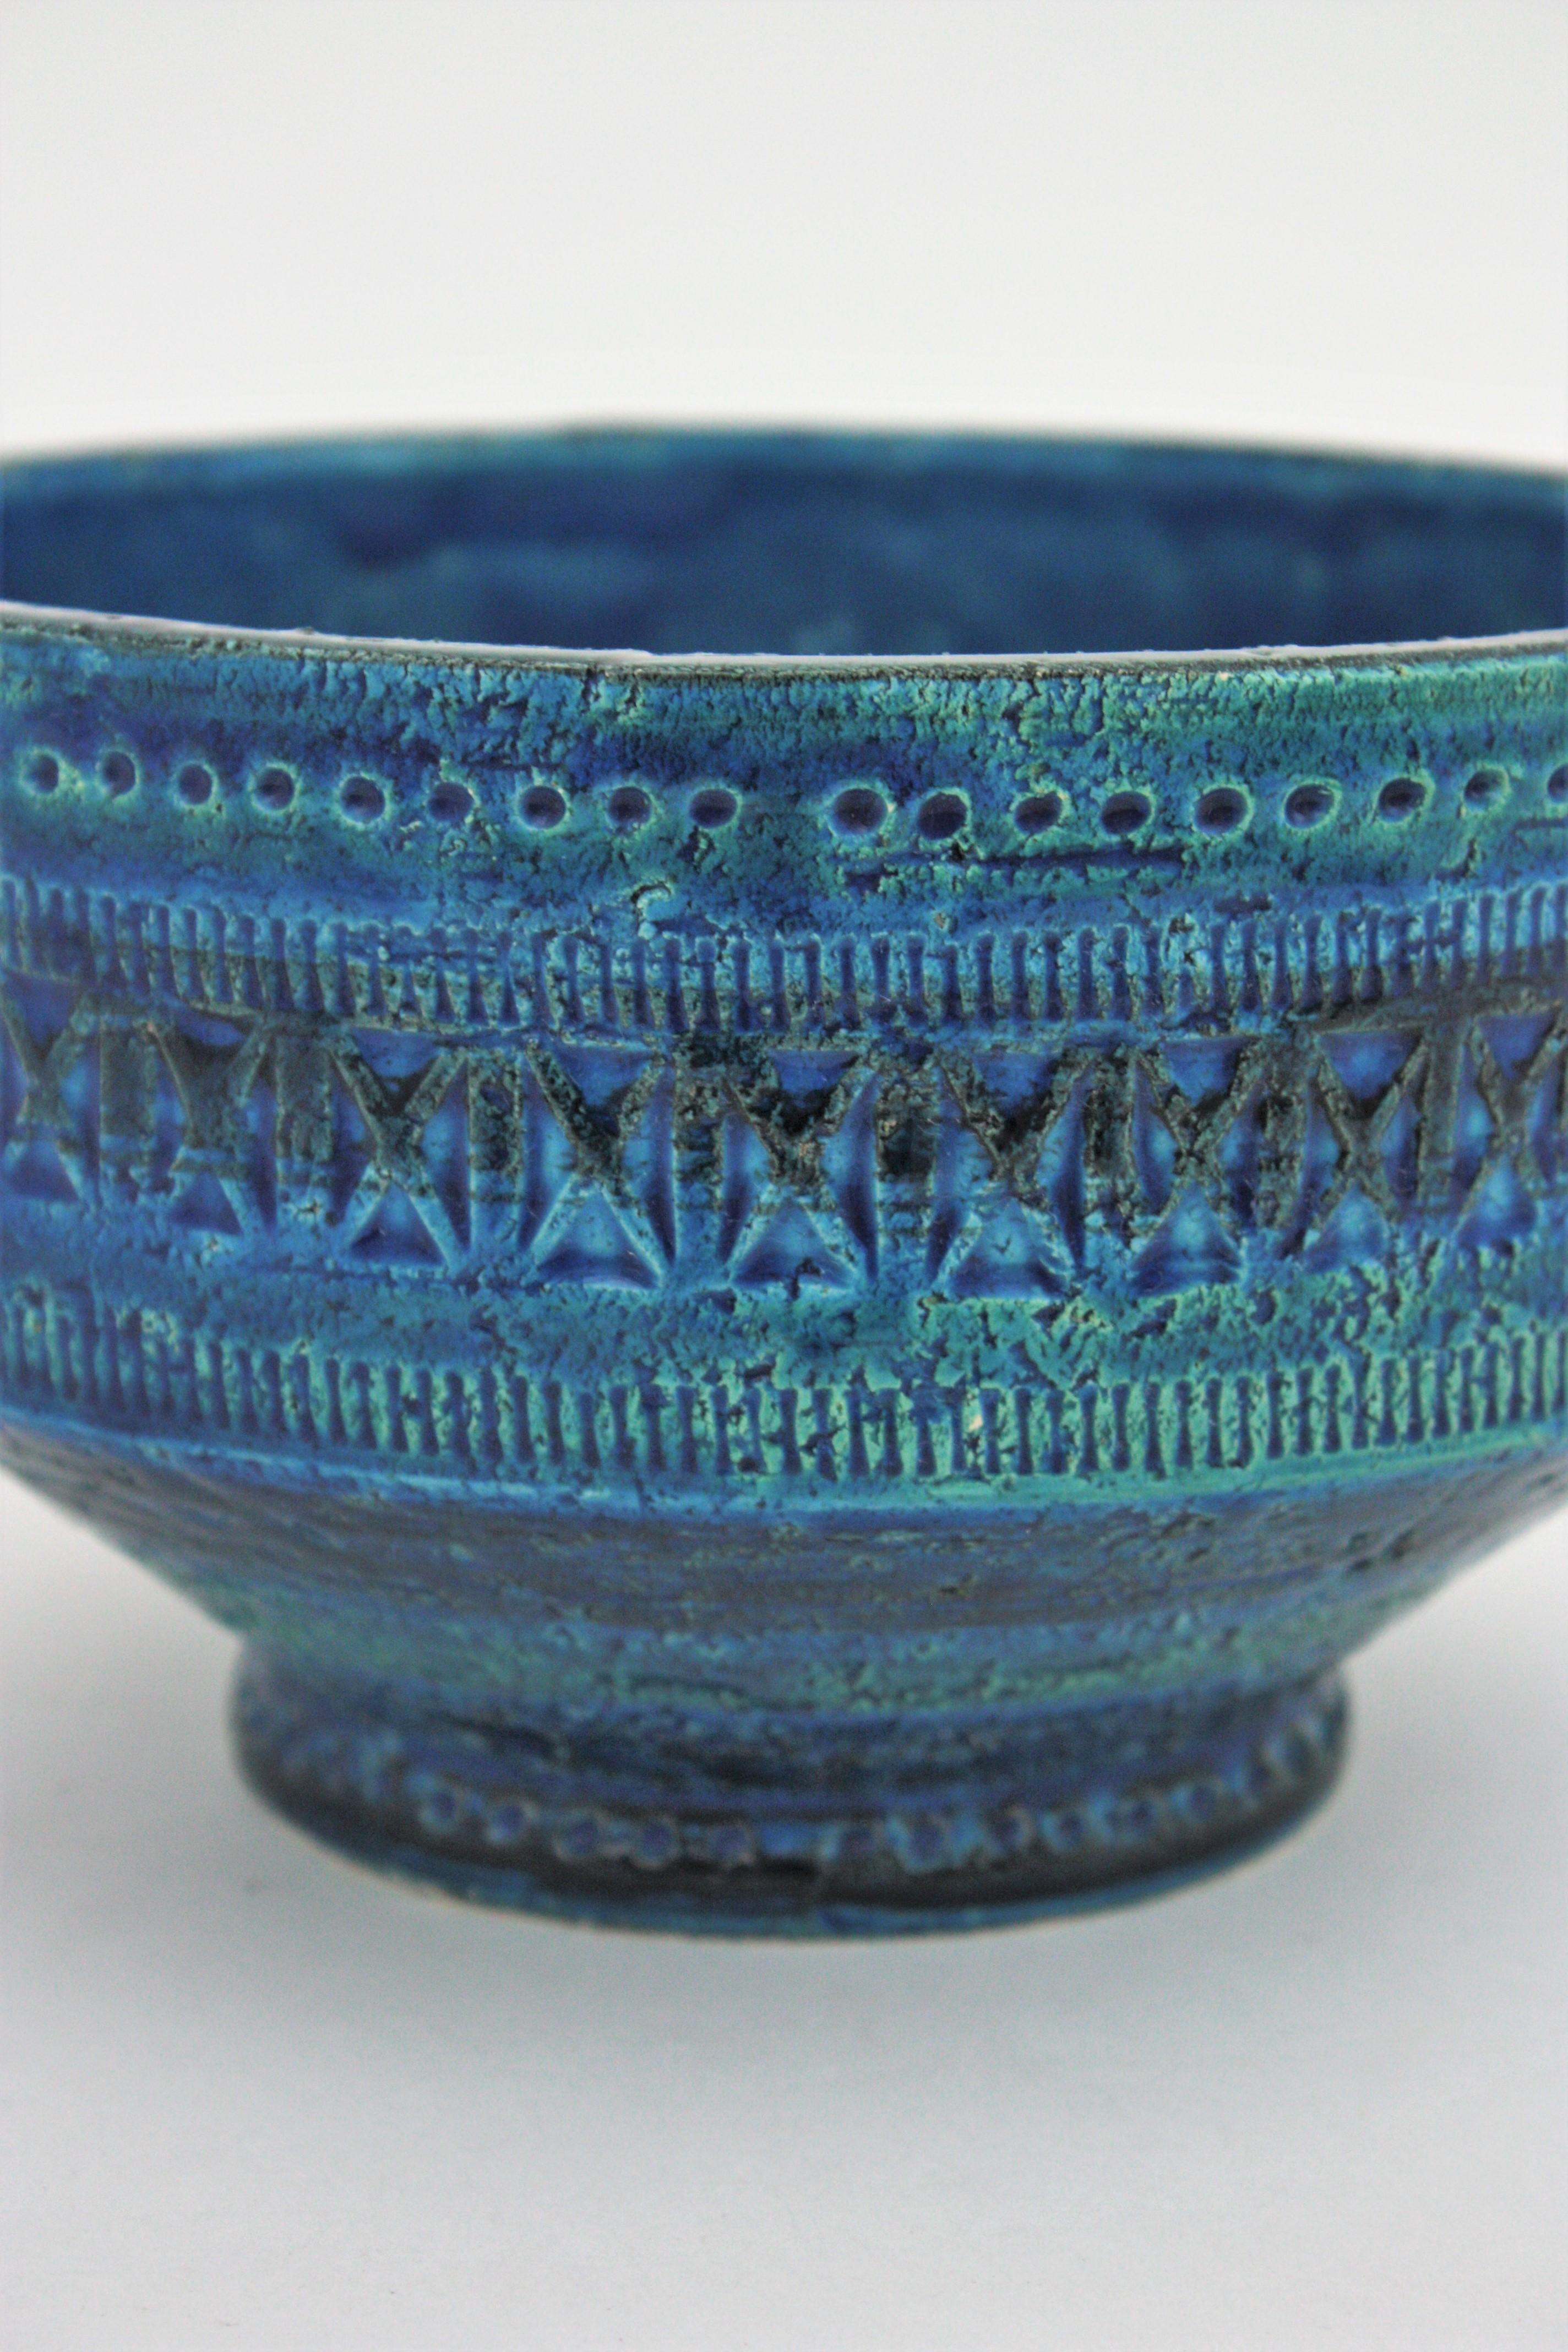 Aldo Londi Bitossi Rimini Blu Glazed Ceramic Centerpiece Bowl, 1950s In Good Condition For Sale In Barcelona, ES